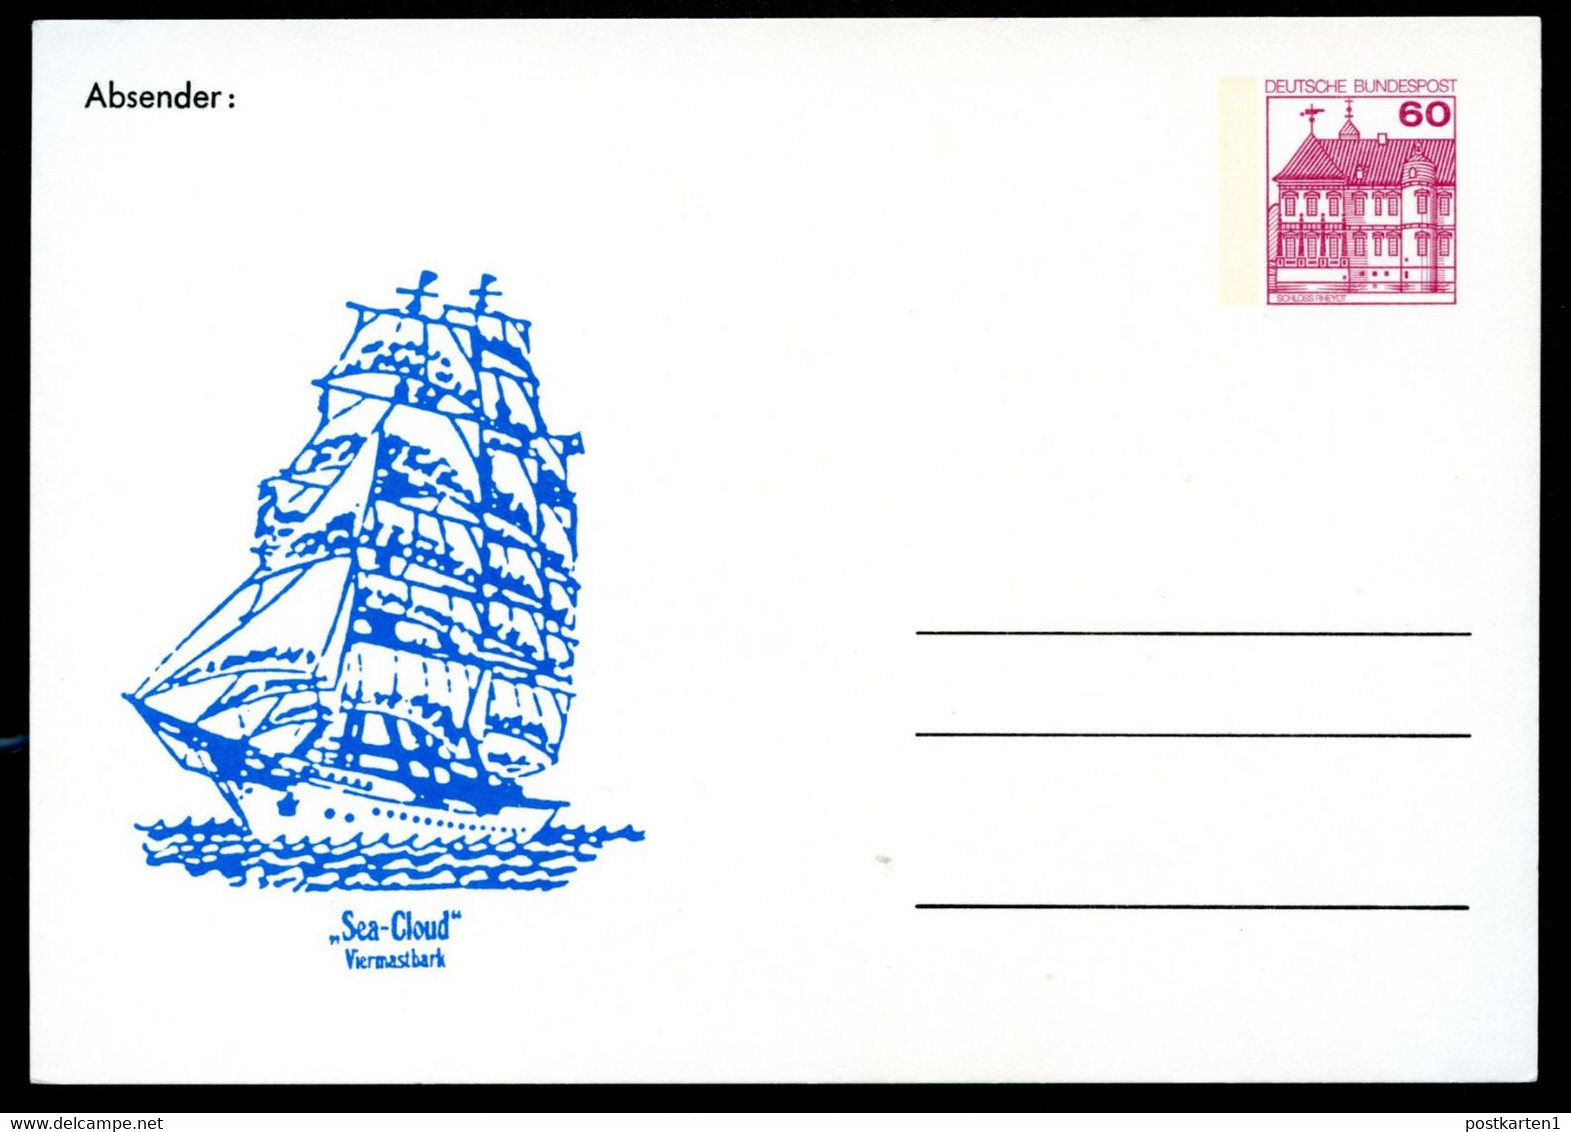 Bund PP106 B1/009 VIERMASTBARK "SEA-CLOUD" Kiel 1987 - Cartes Postales Privées - Neuves